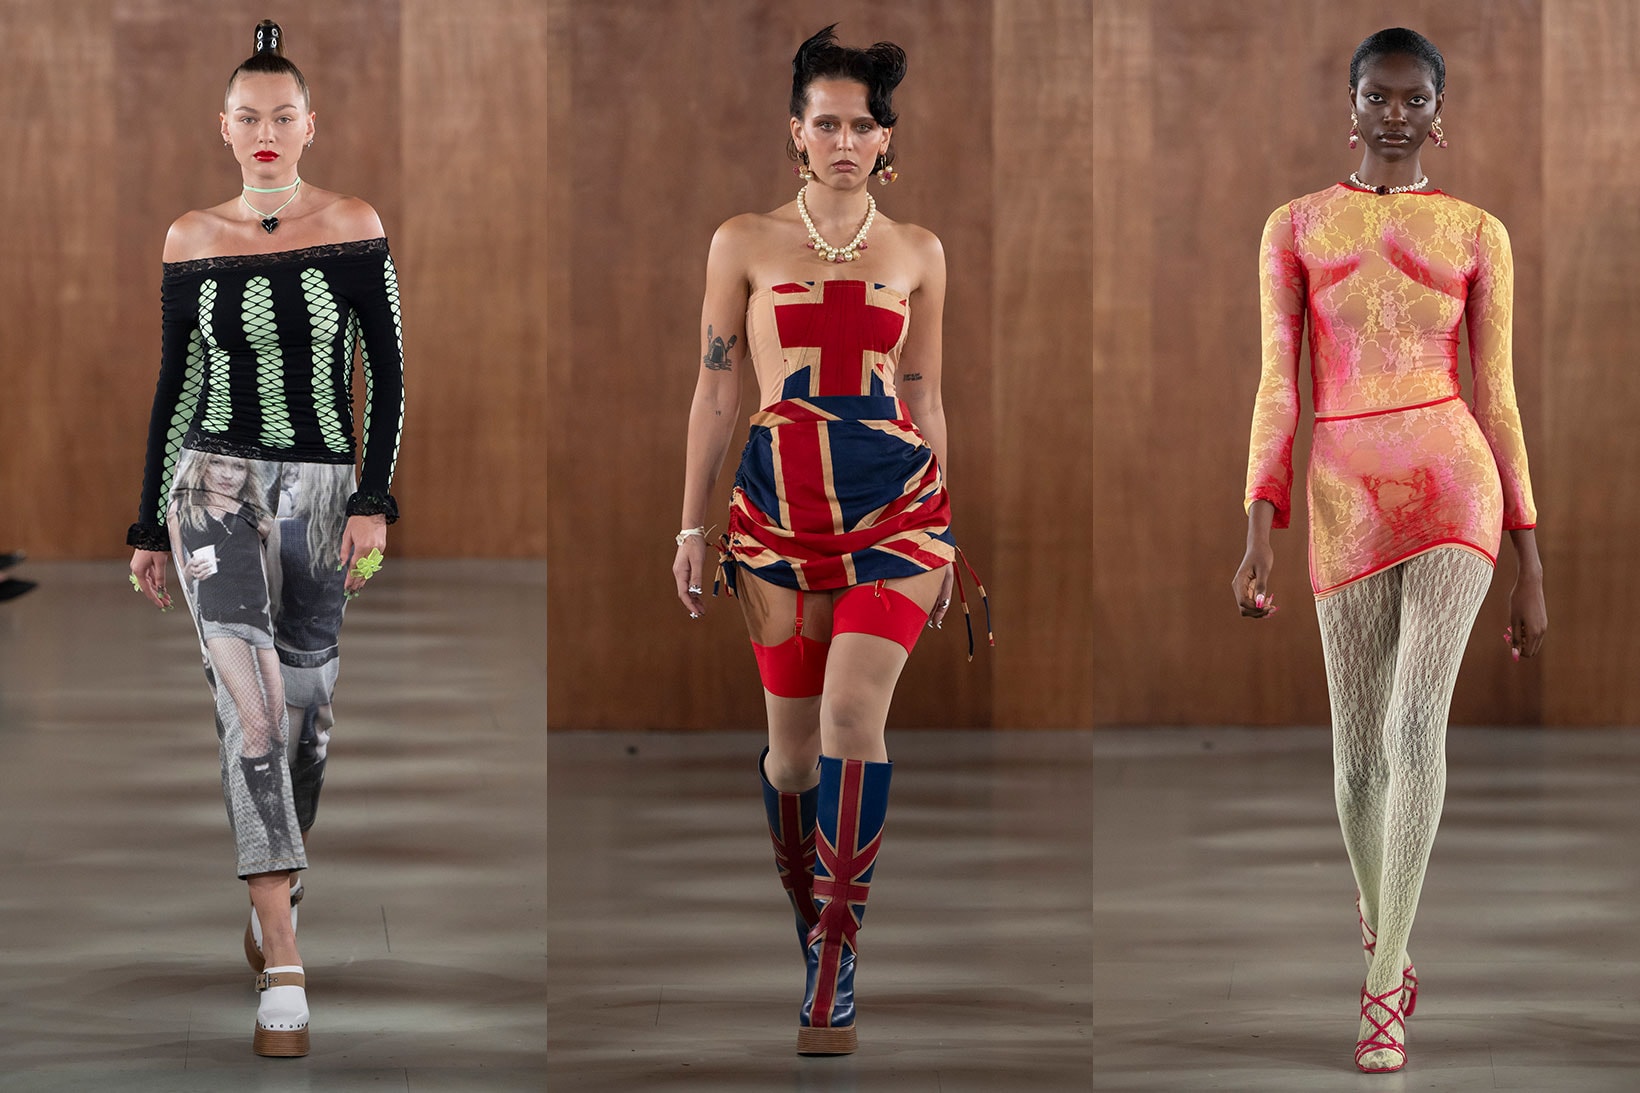 Sinead gorey london fashion week brit pop spice girls kate moss glastonbury union jack